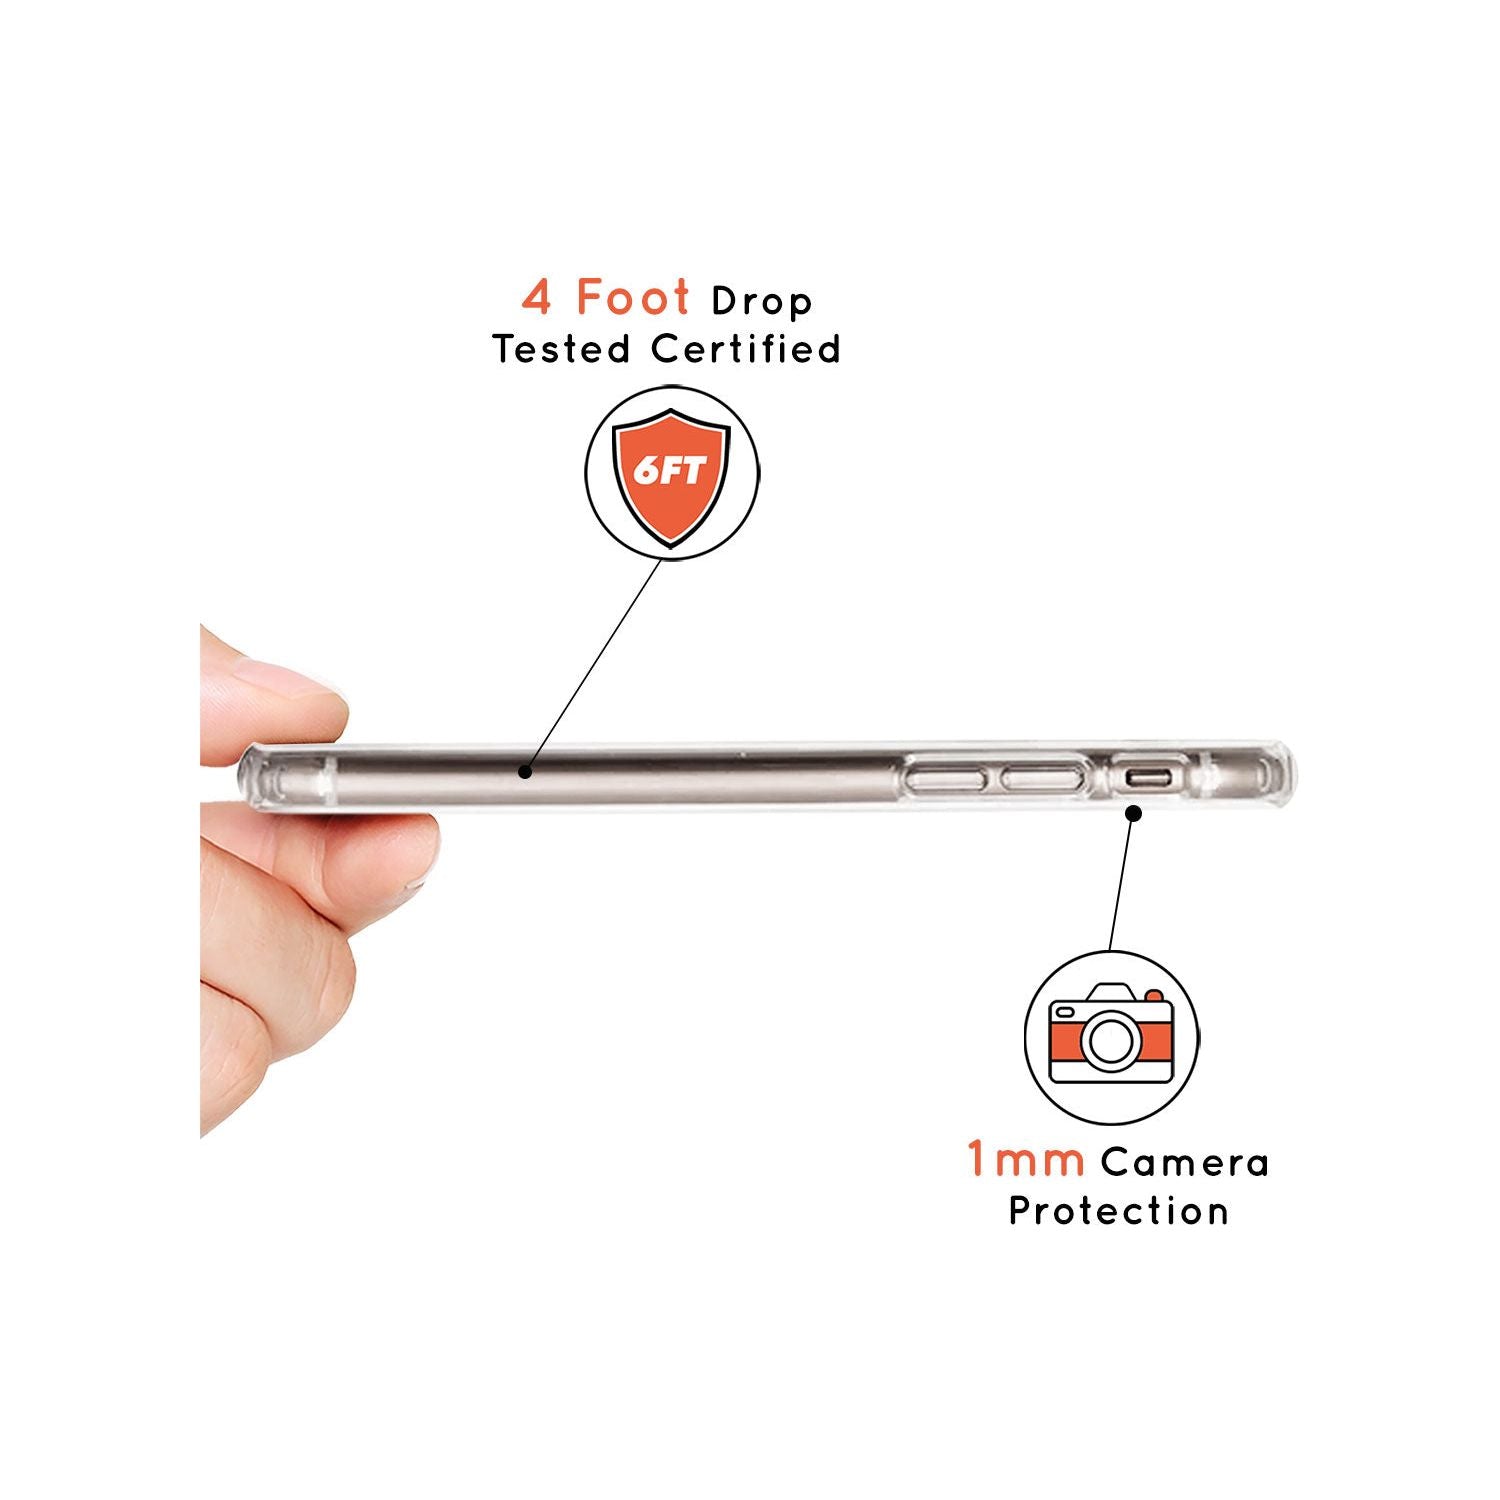 Libra Emblem - Transparent Design Slim TPU Phone Case for iPhone 11